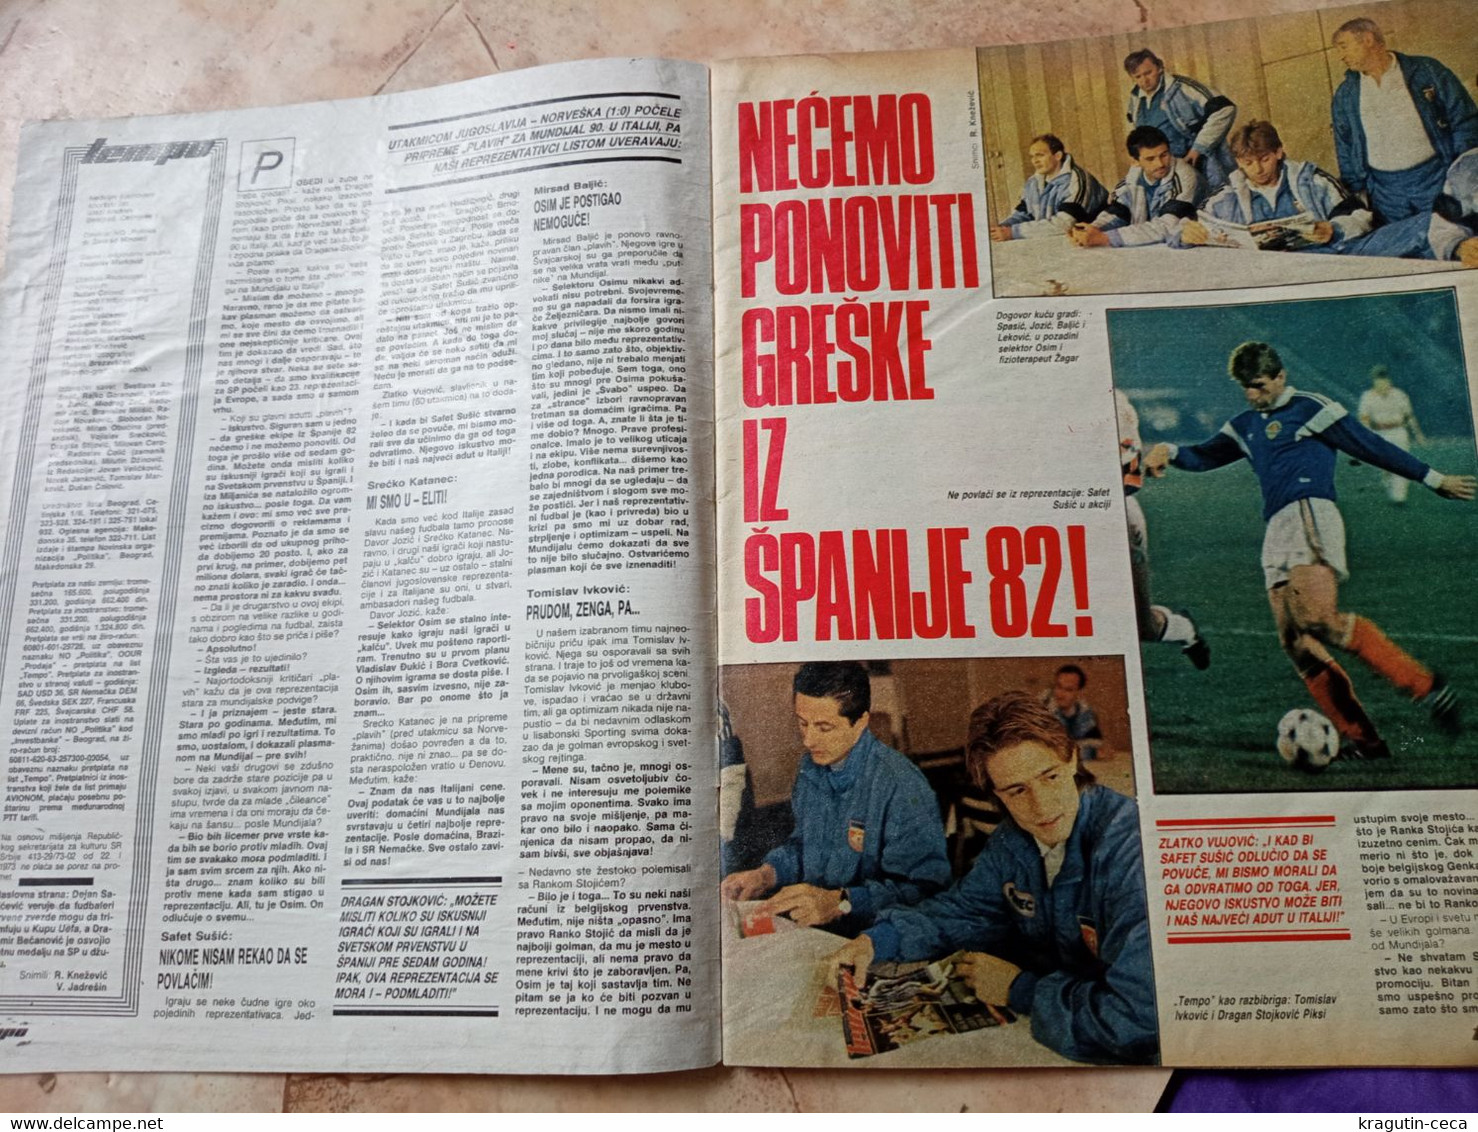 1989 TEMPO YUGOSLAVIA SERBIA SPORT FOOTBALL MAGAZINE NEWSPAPERS BASKETBALL CHAMPIONSHIPS PARTIZAN PIKSI SEKULARAC ZVEZDA